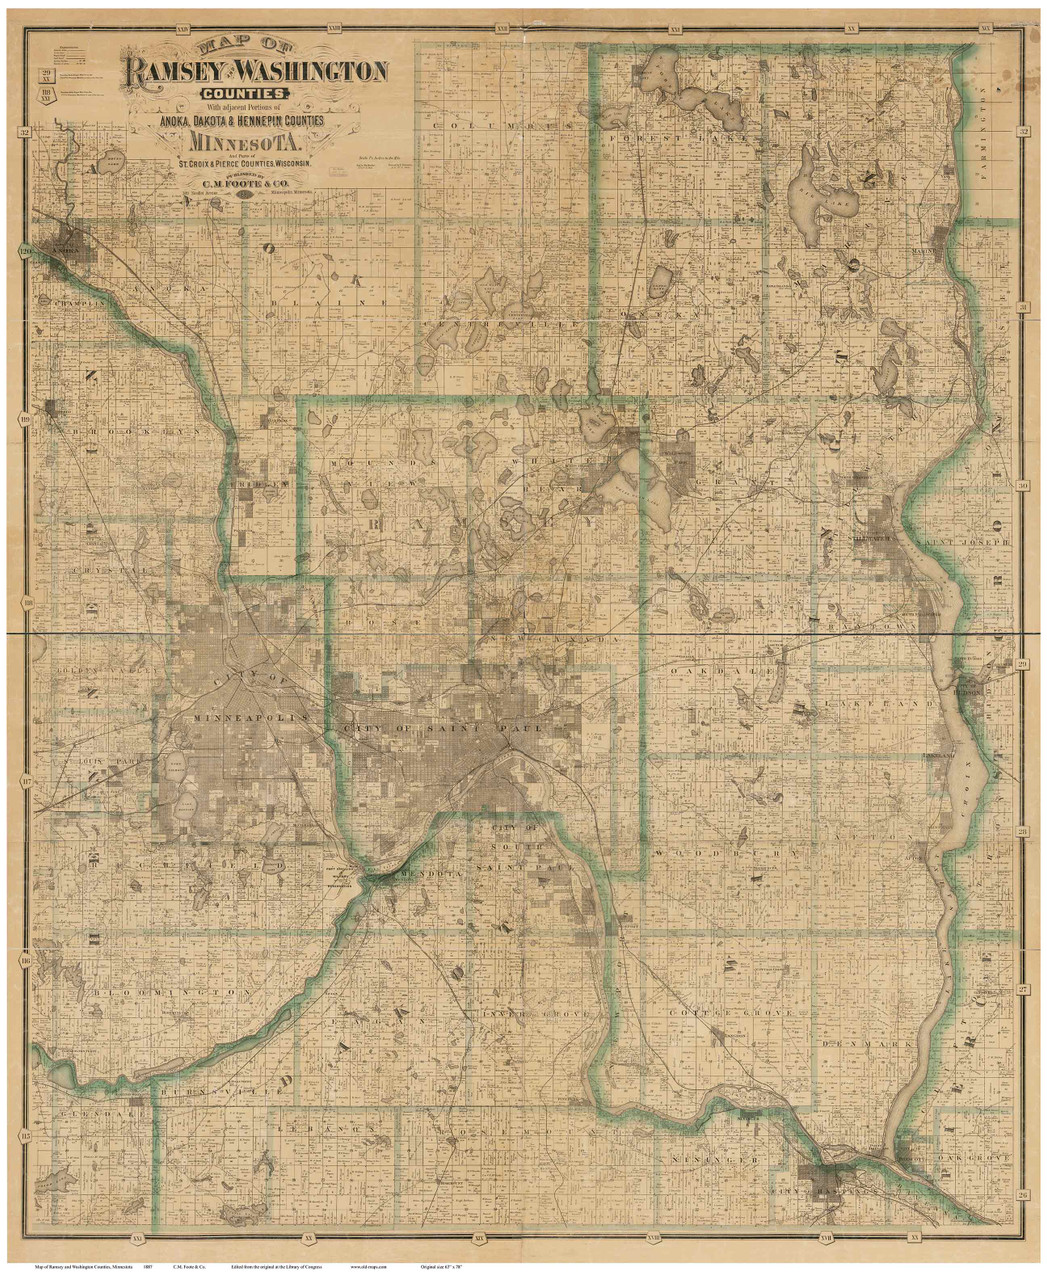 Old Map of St. Paul minnesota Saint Paul Map Fine Print 